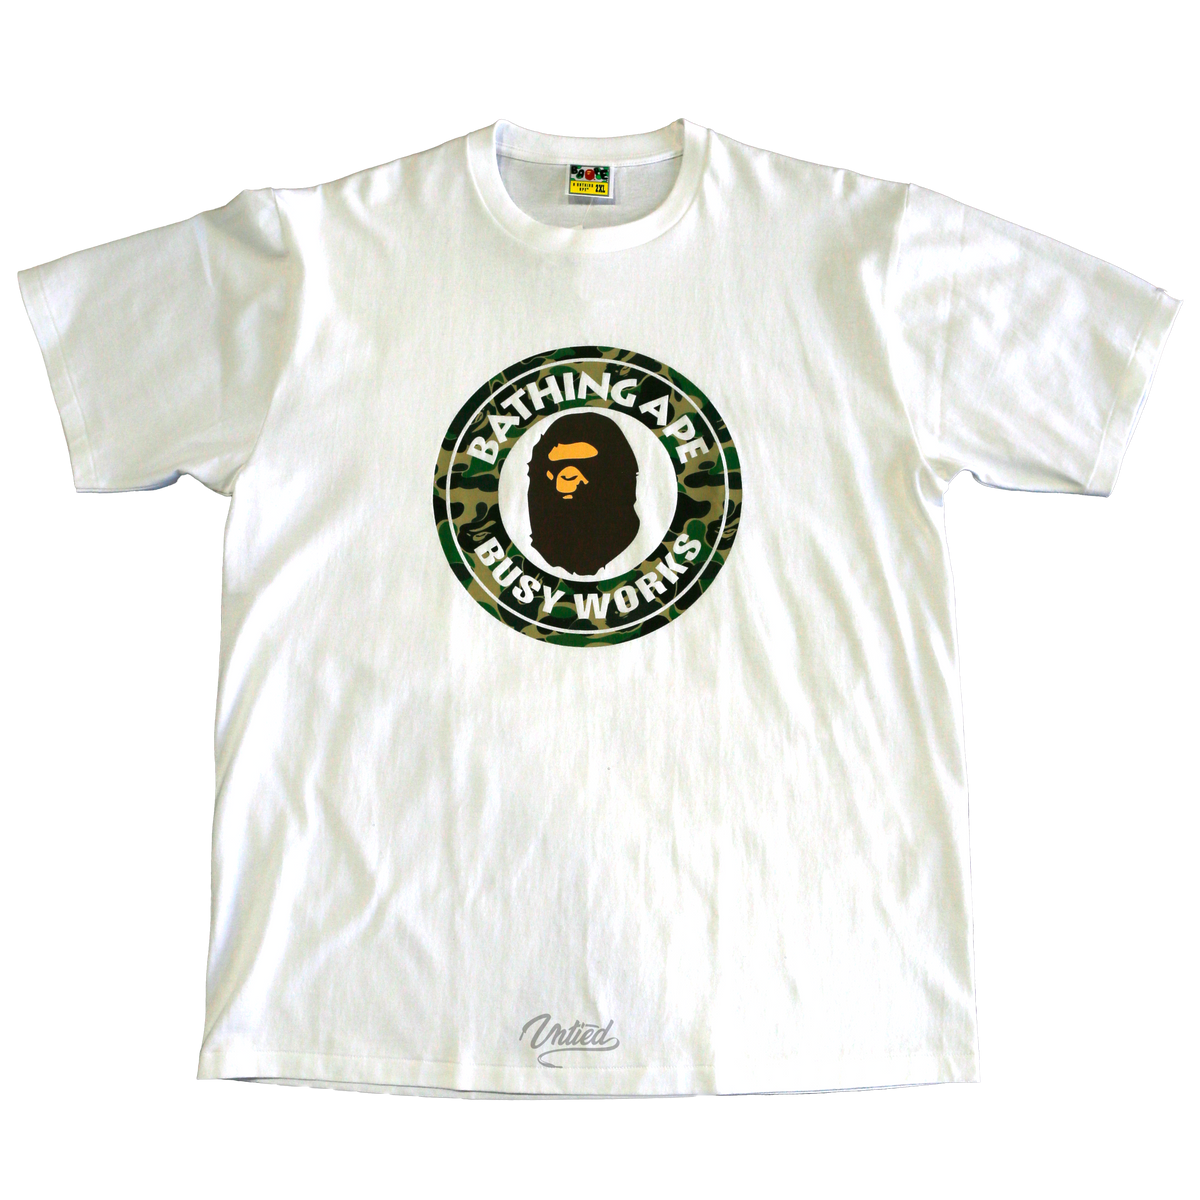 ABC Camo White/Green Camo T-shirt